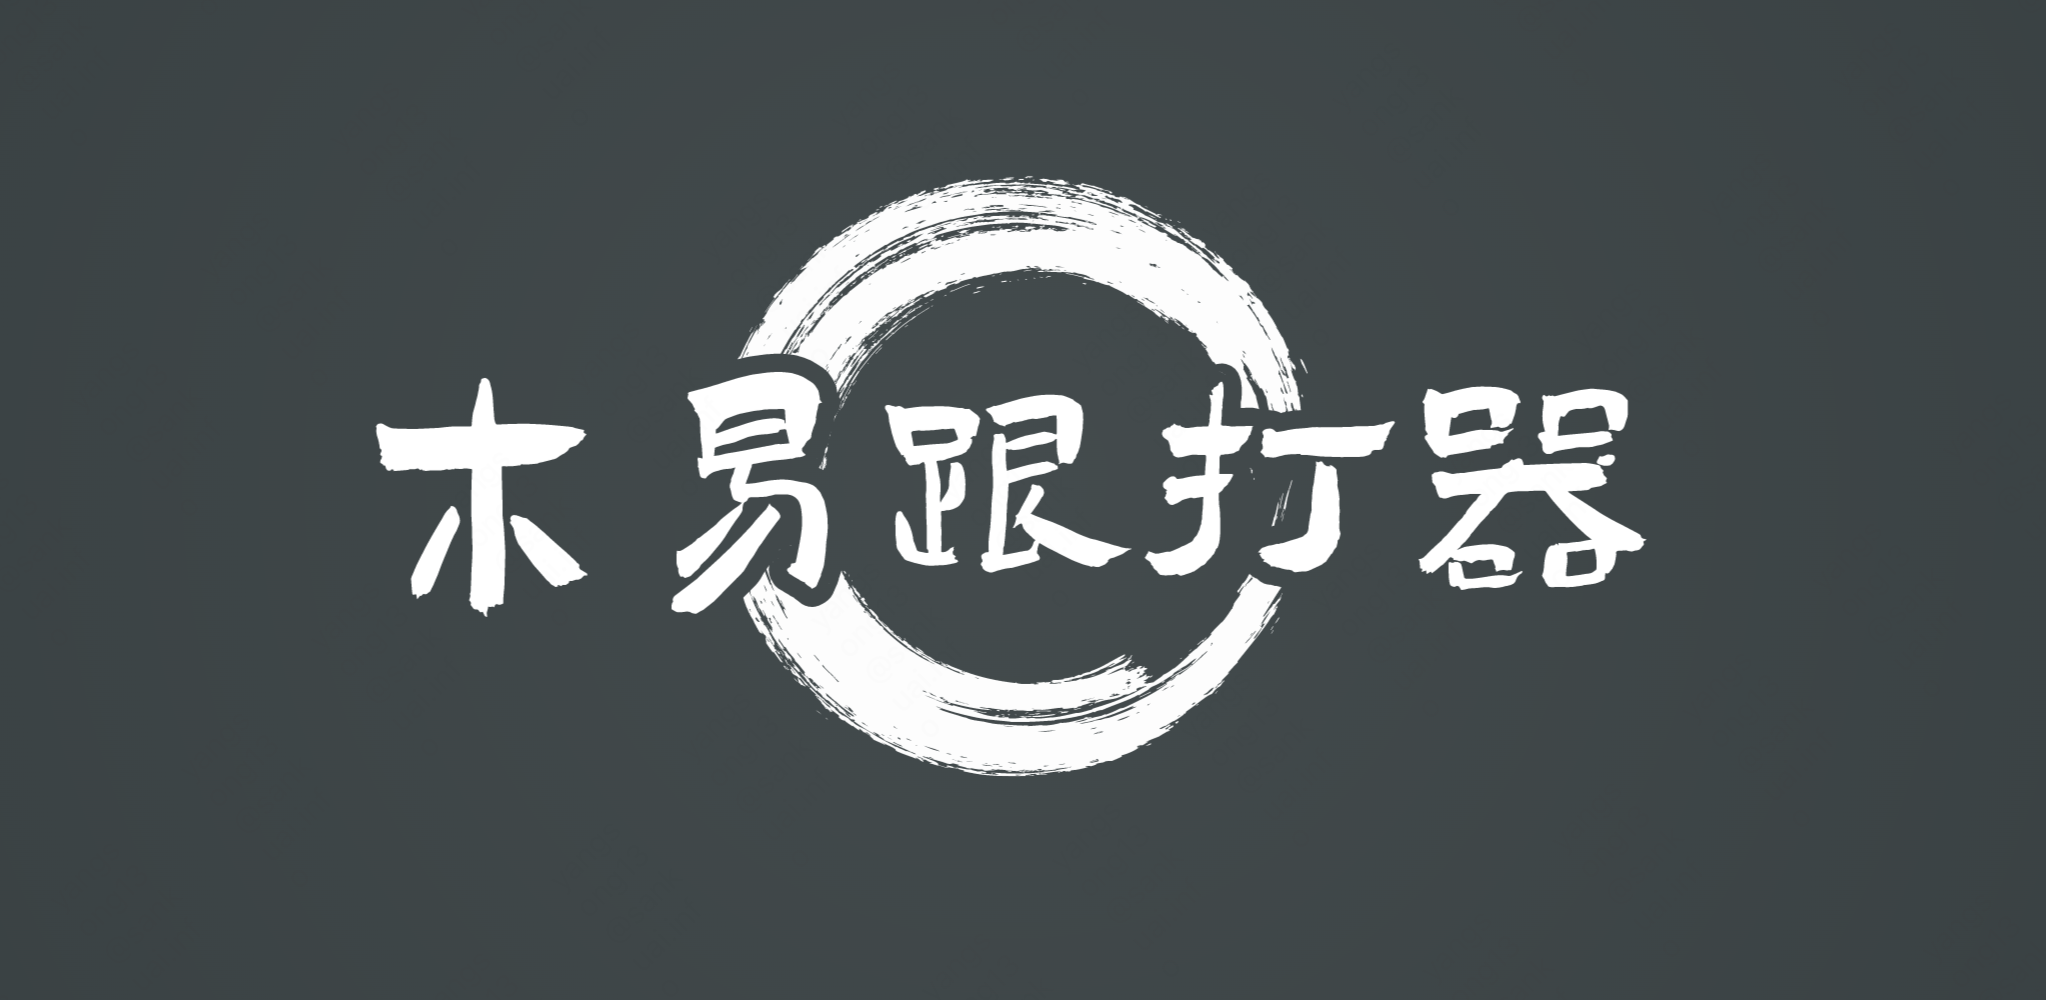 Banner for blog post with title "木易跟打器macOS上可直接载文的跟打器[草稿]"